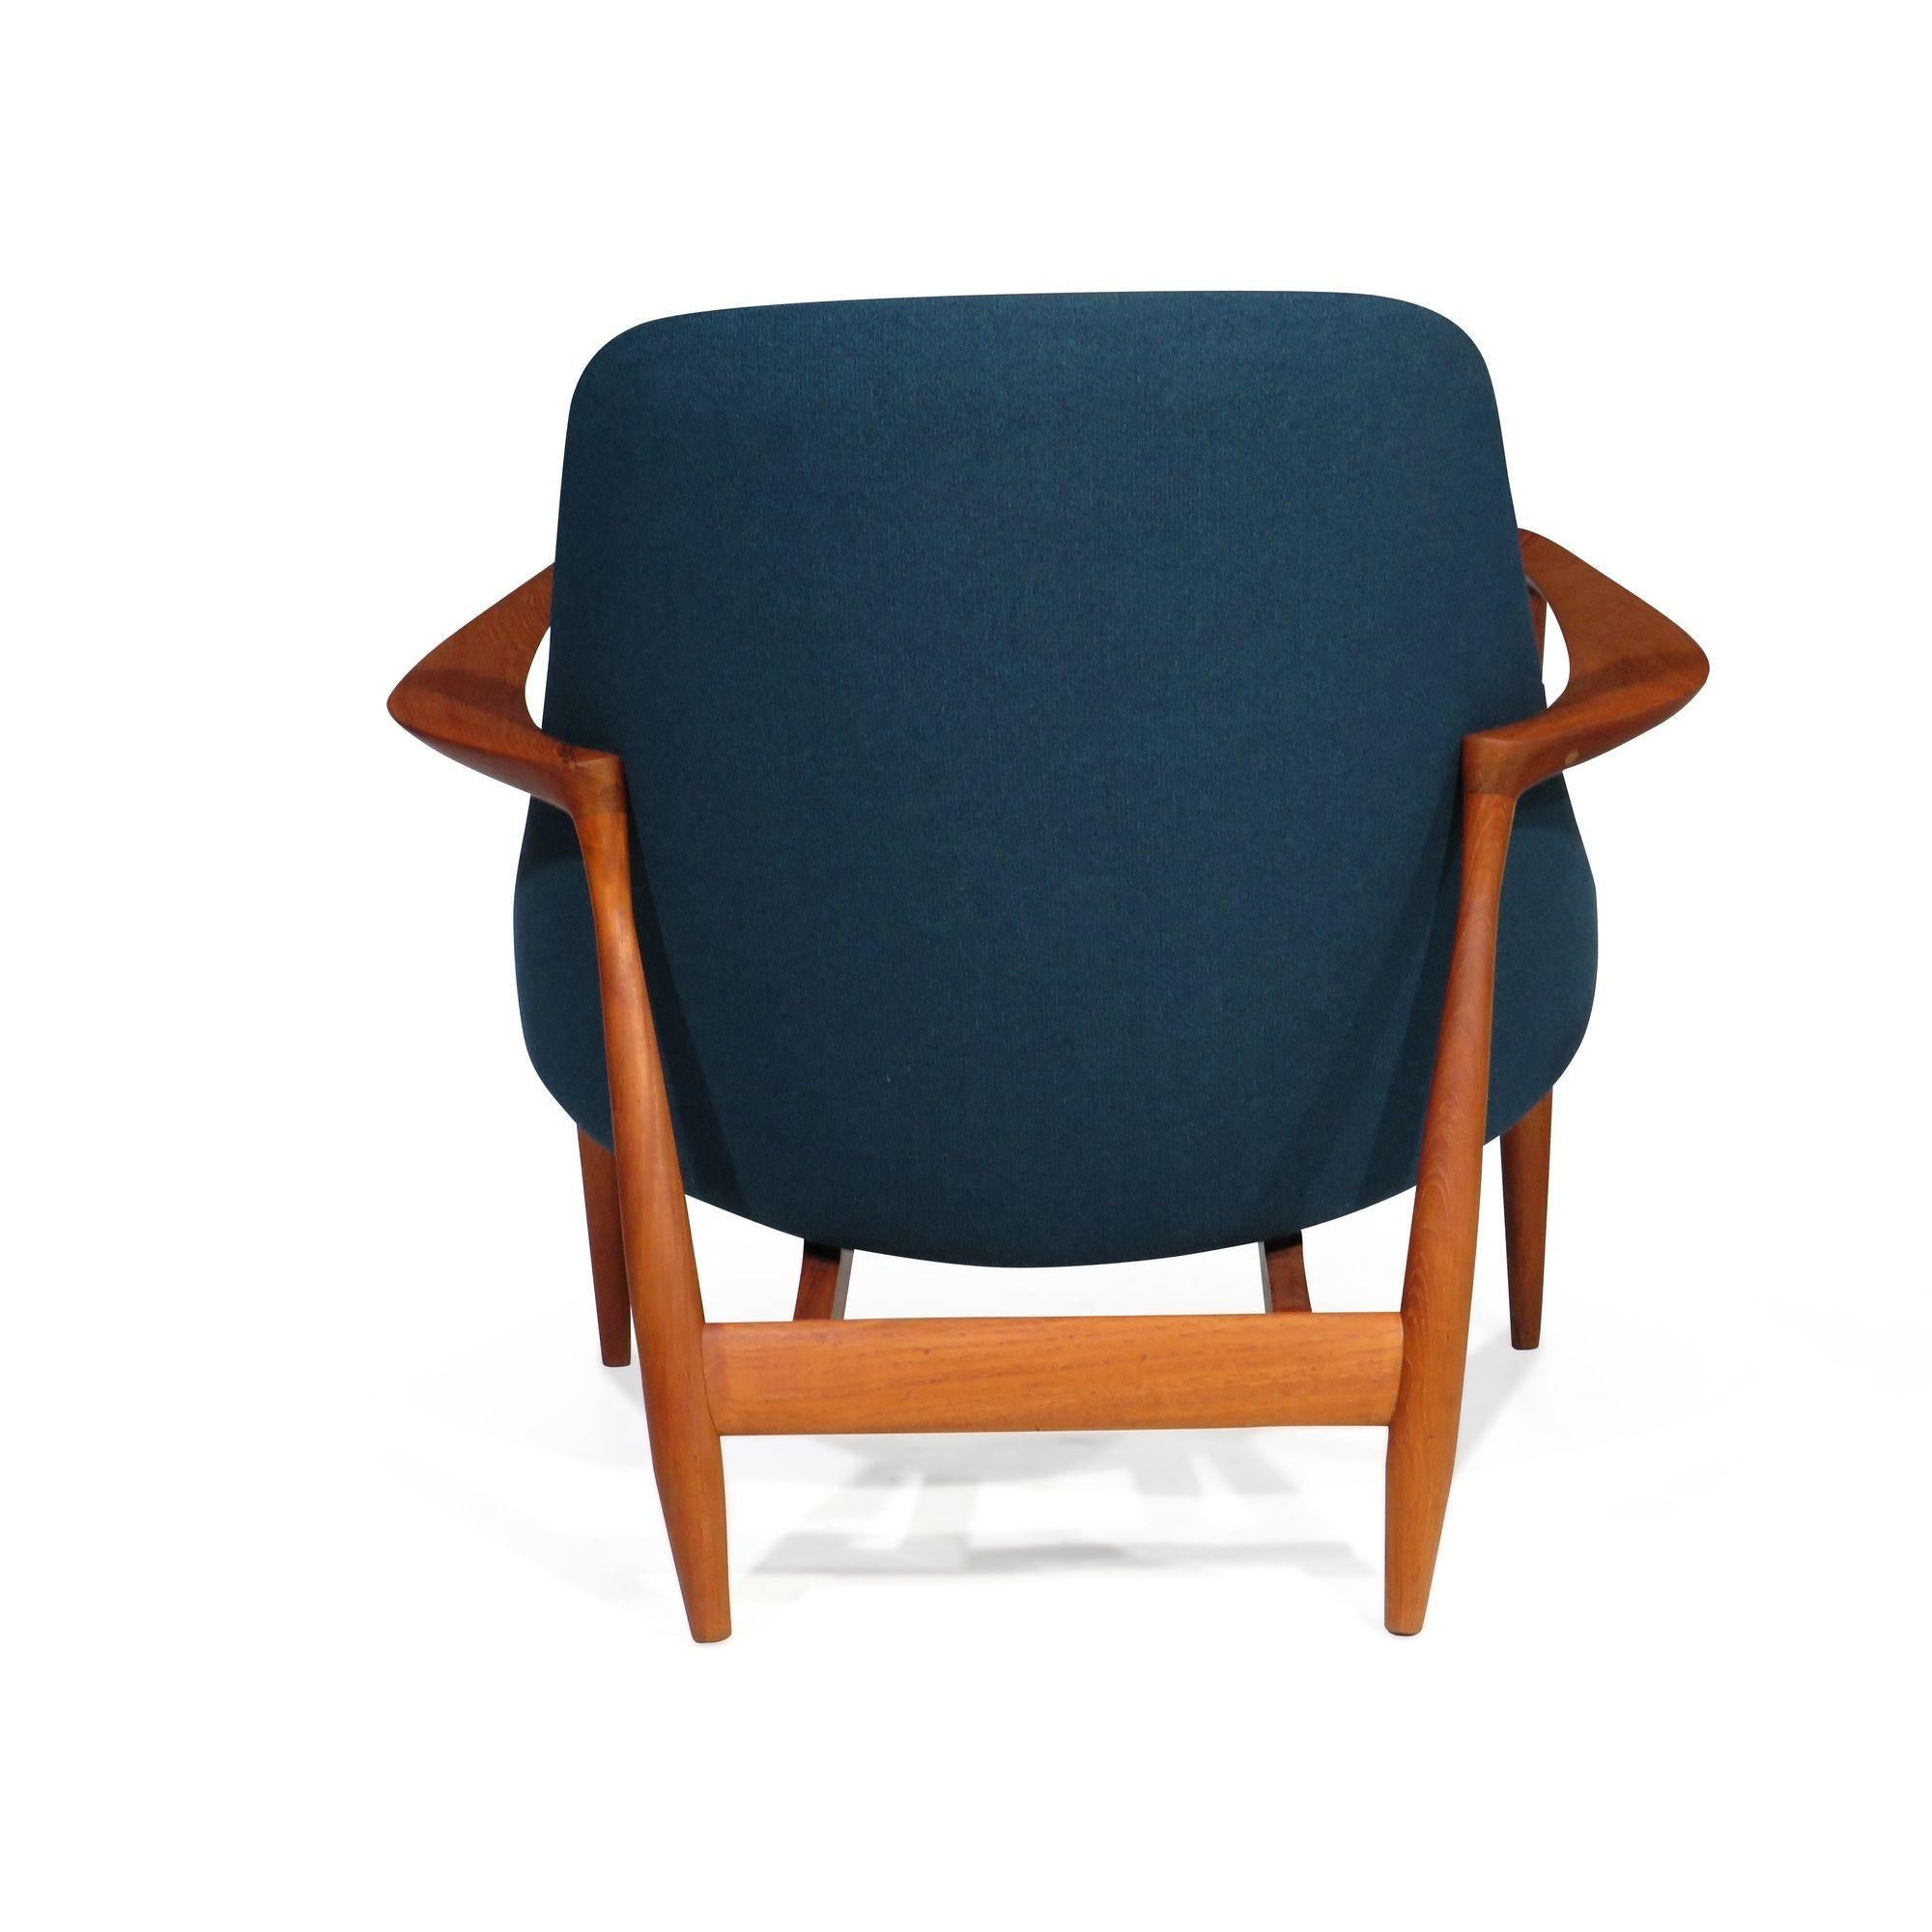 [Queen] Elizabeth Lounge Chairs by IB Kofod Larsen U56 2